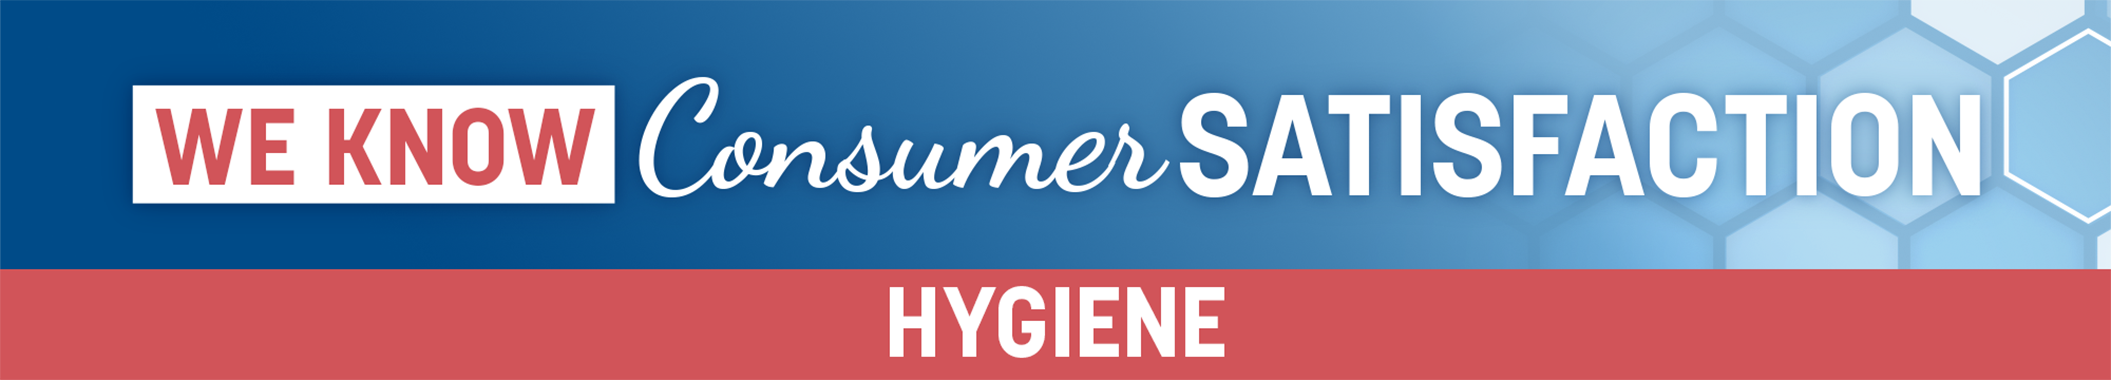 Hygiene Consumer Satisfaction